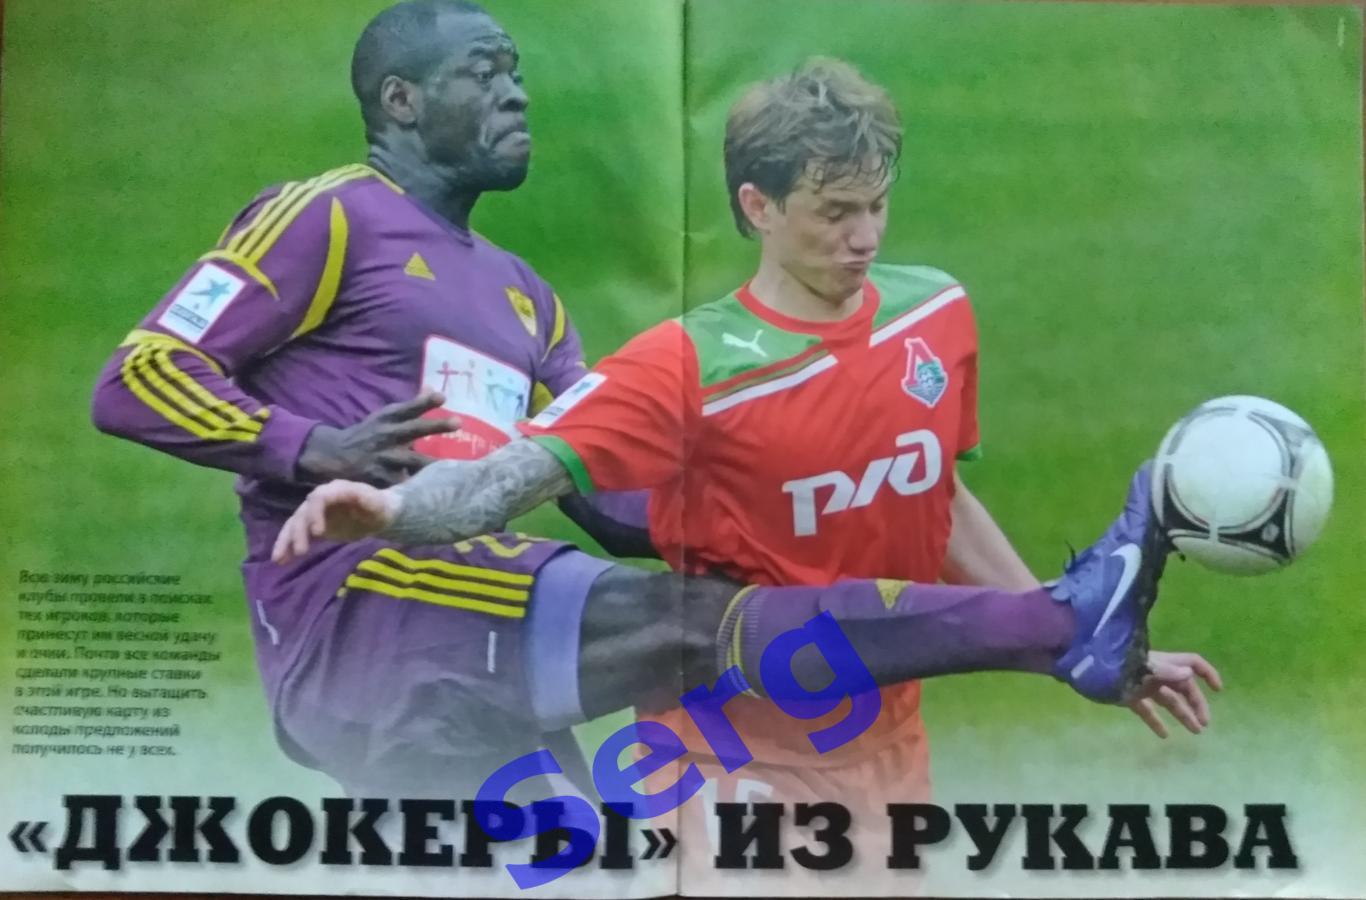 Журнал Спорт. День за днем №13 11.04-17.04.2012 год 1